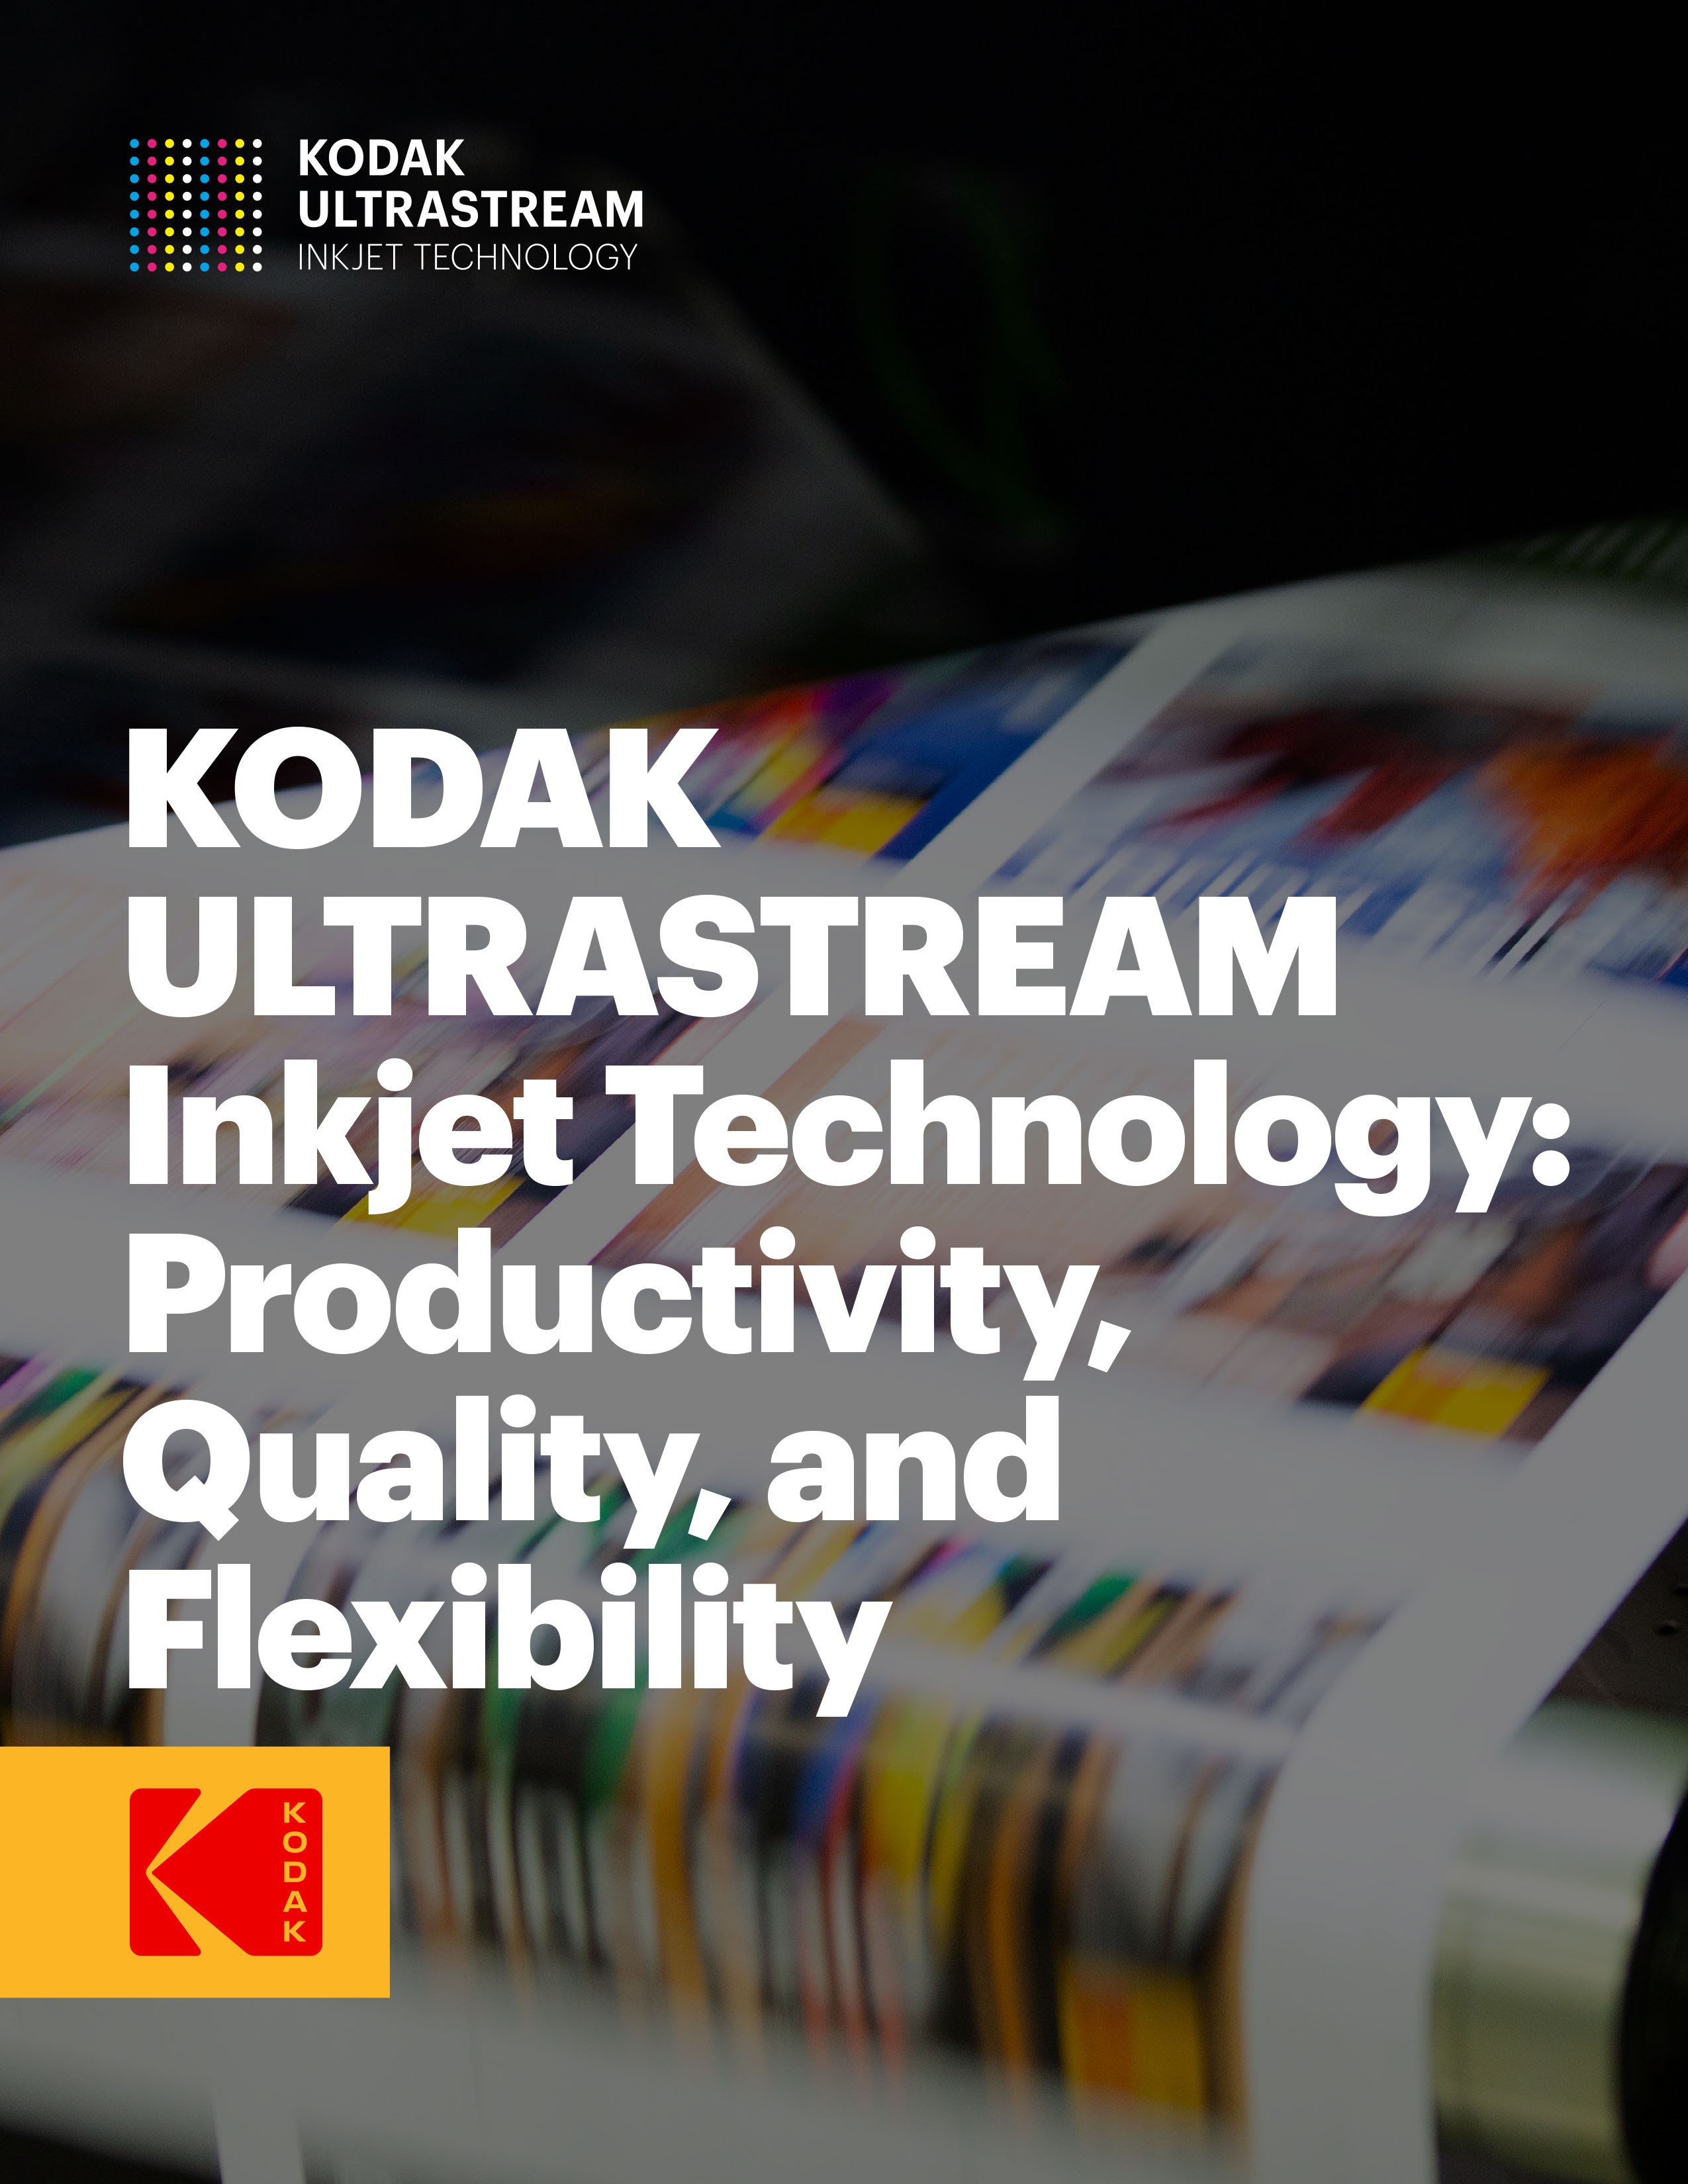 KODAK ULTRASTREAM Inkjet Technology: Productivity, Quality, and Flexibility